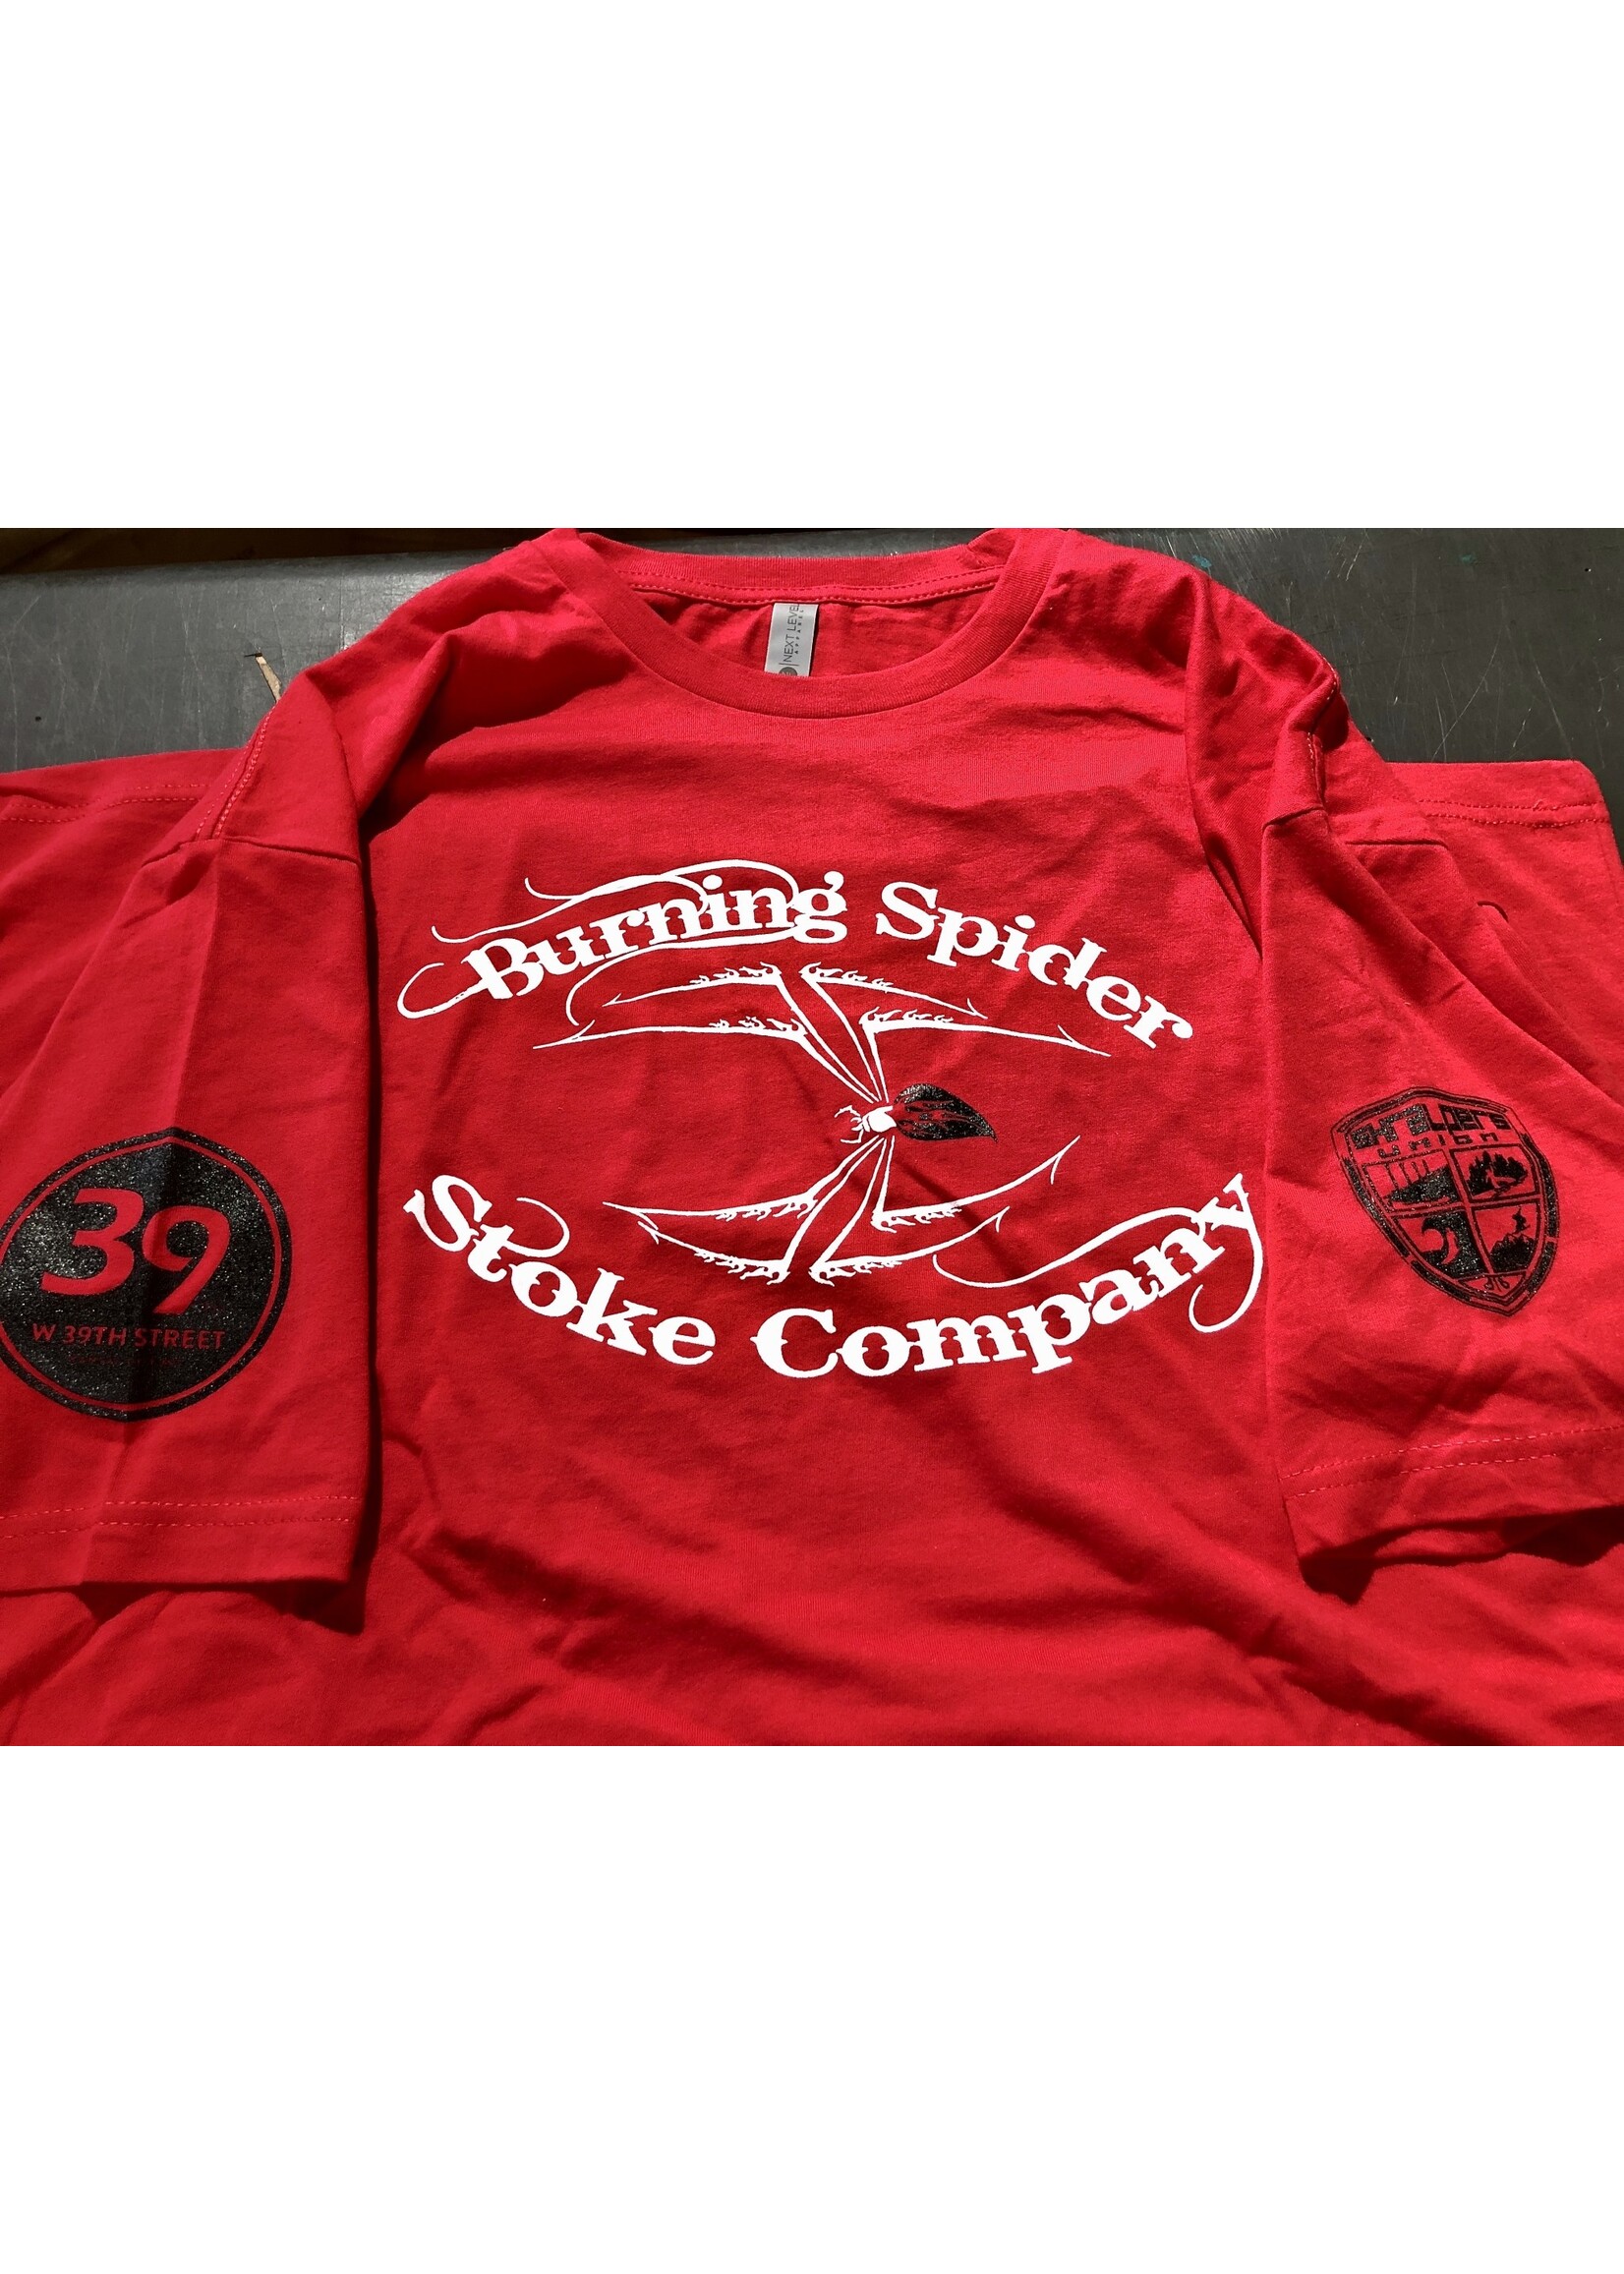 Burning Spider Stoke Company Burning Spider Logo Shirt Red